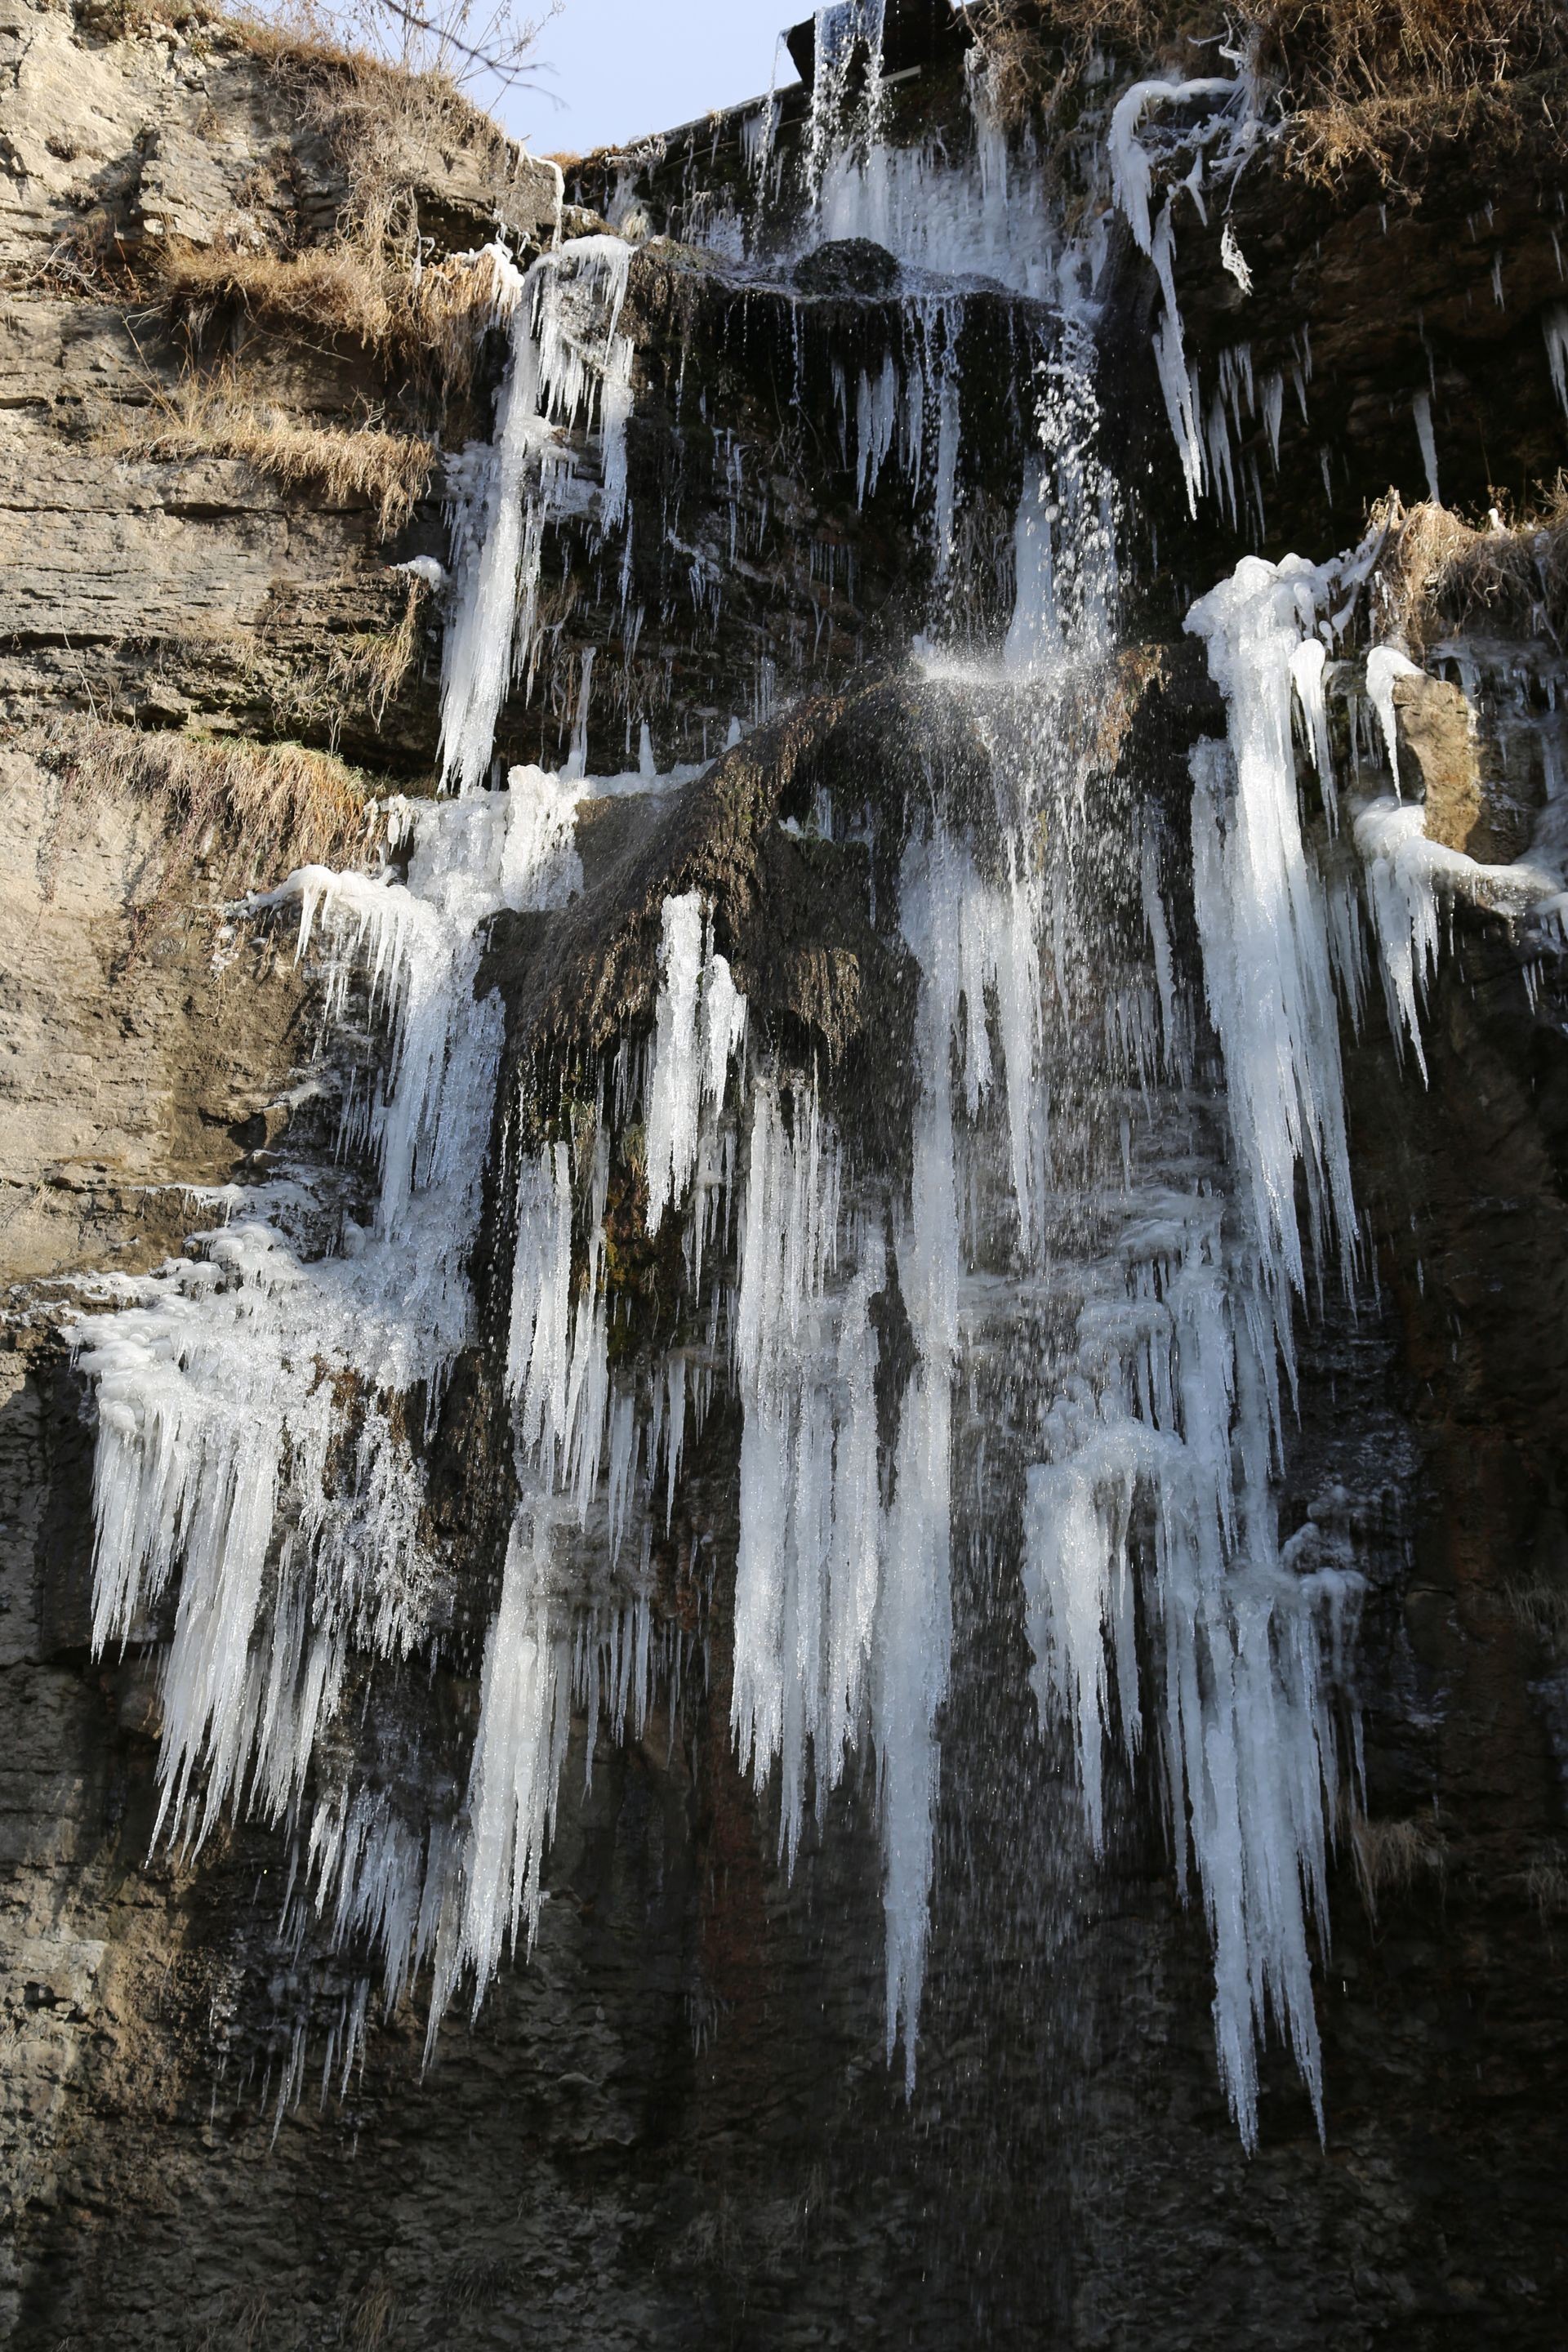 Butakovka Waterfall